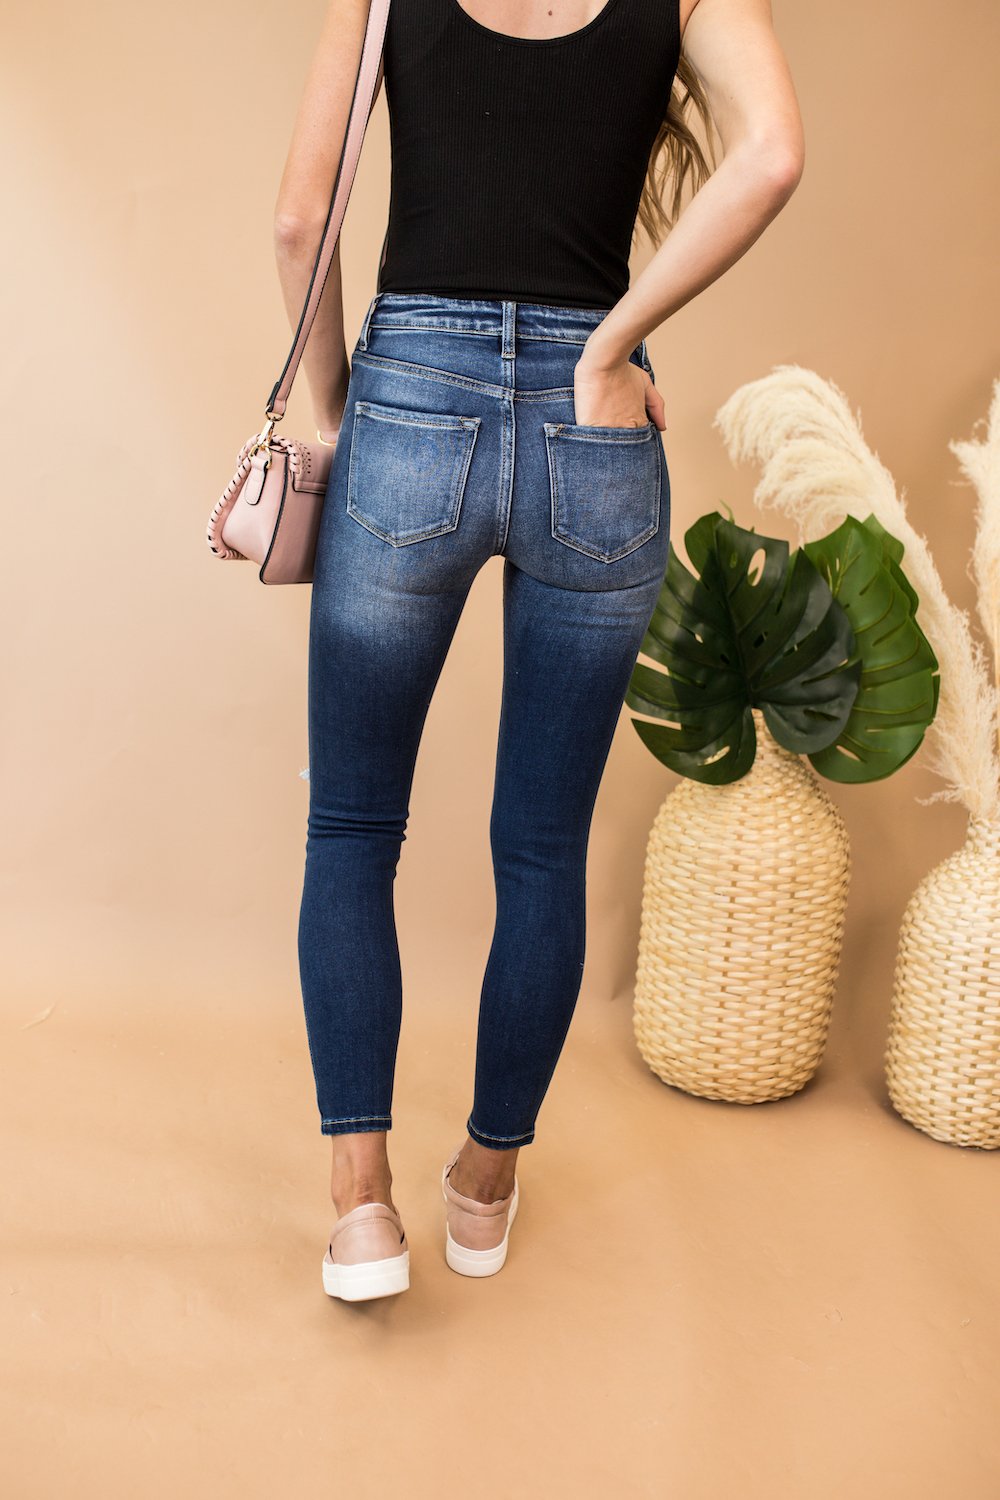 PLUS/REG Last Chance Skinny Jeans-Krush Kandy, Women's Online Fashion Boutique Located in Phoenix, Arizona (Scottsdale Area)